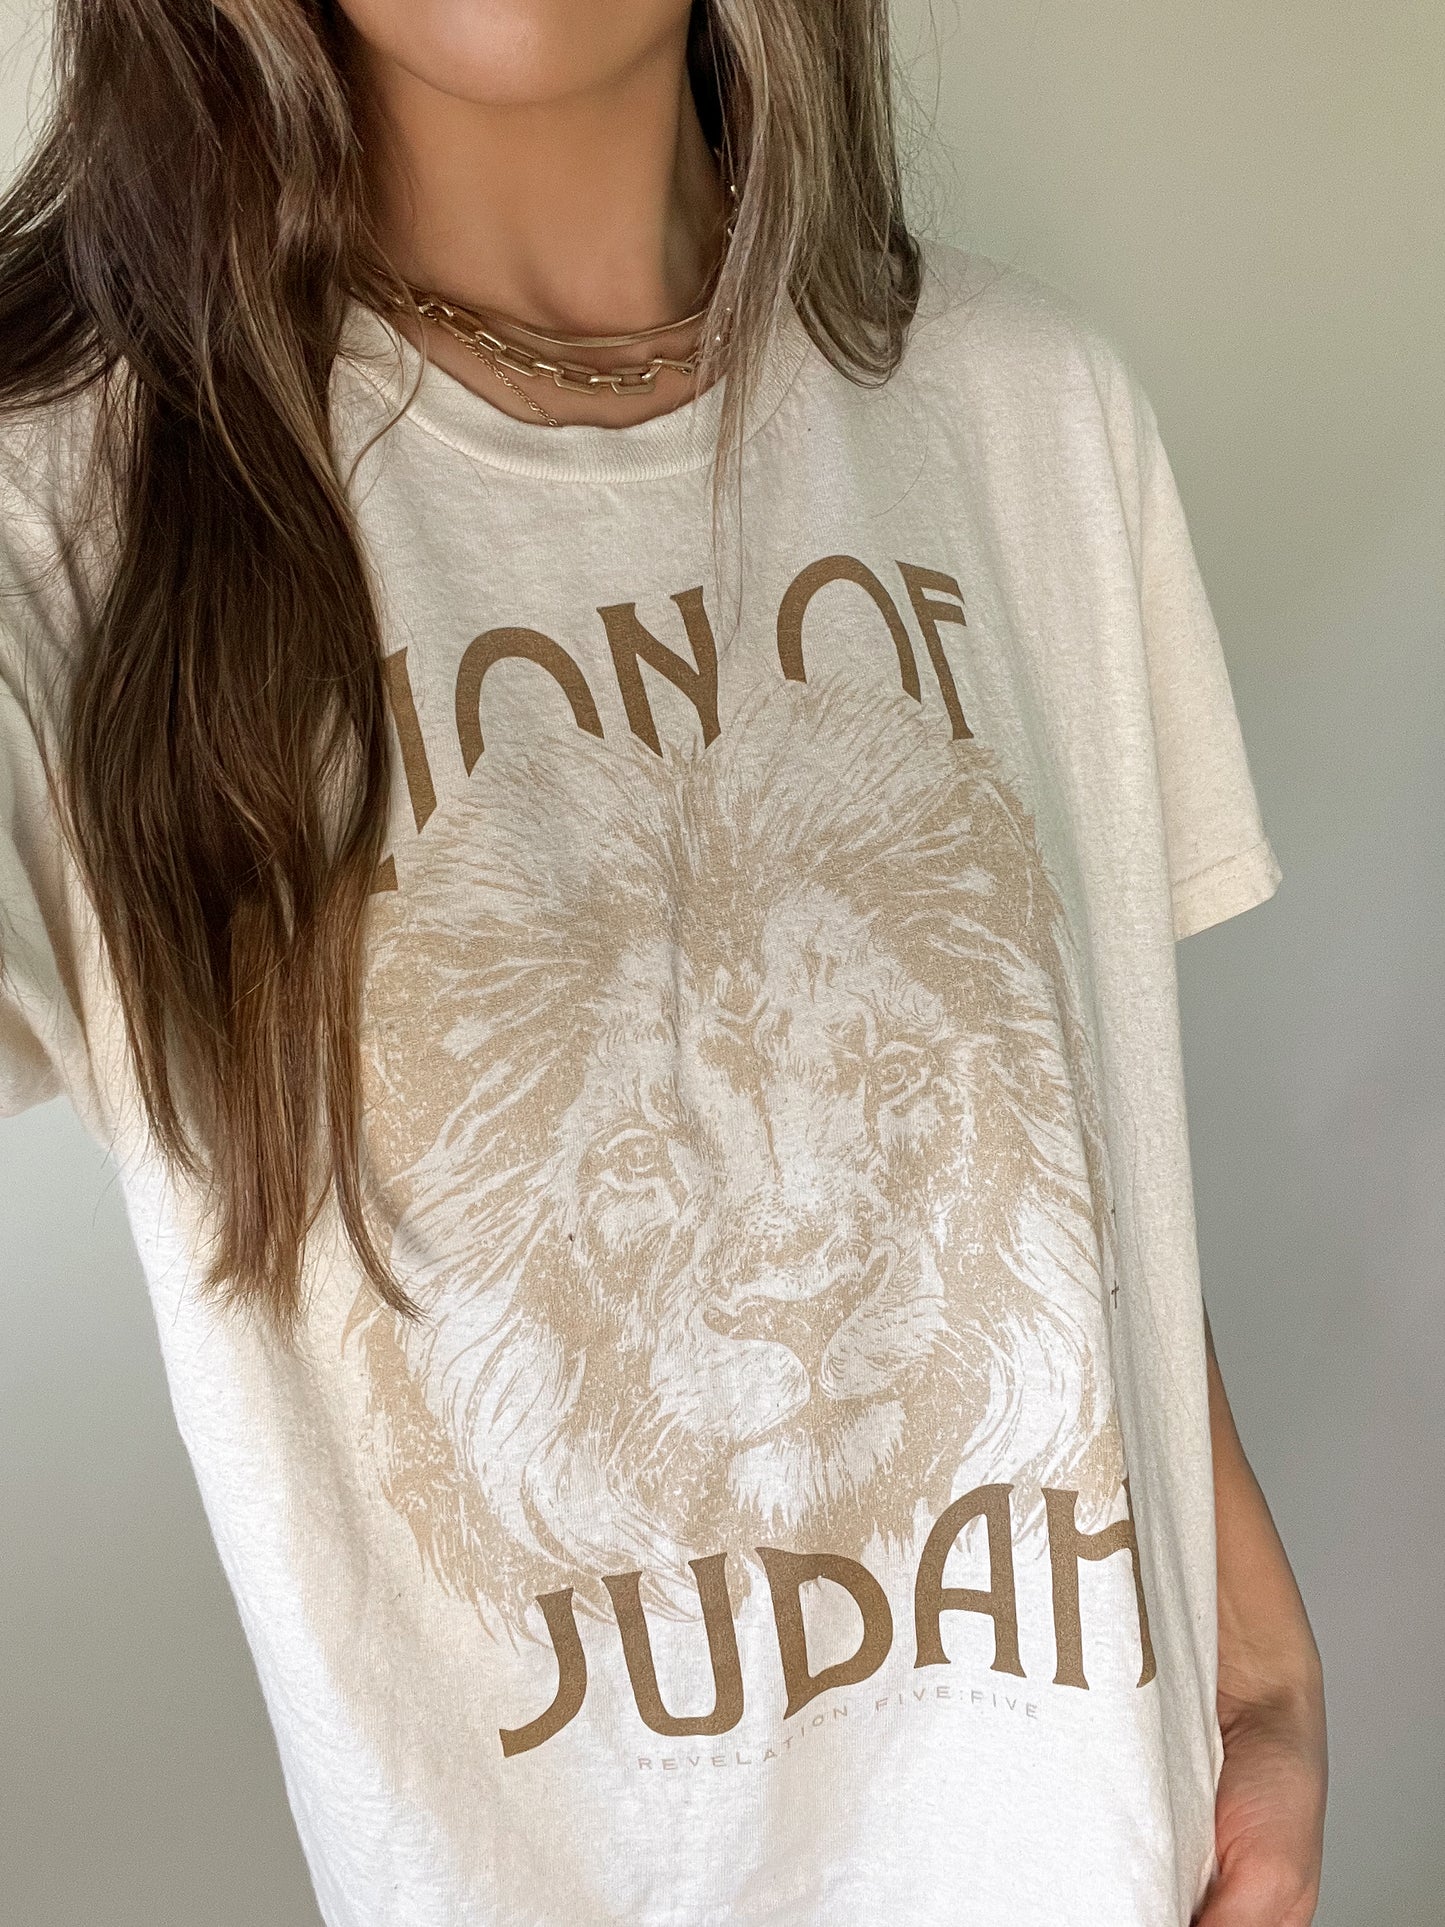 Lion of Judah Christian Shirt | Christian Apparel | Bible Verse Shirt | Jesus Shirt | Christian Tshirt | Worship Shirt | Christian Shirts